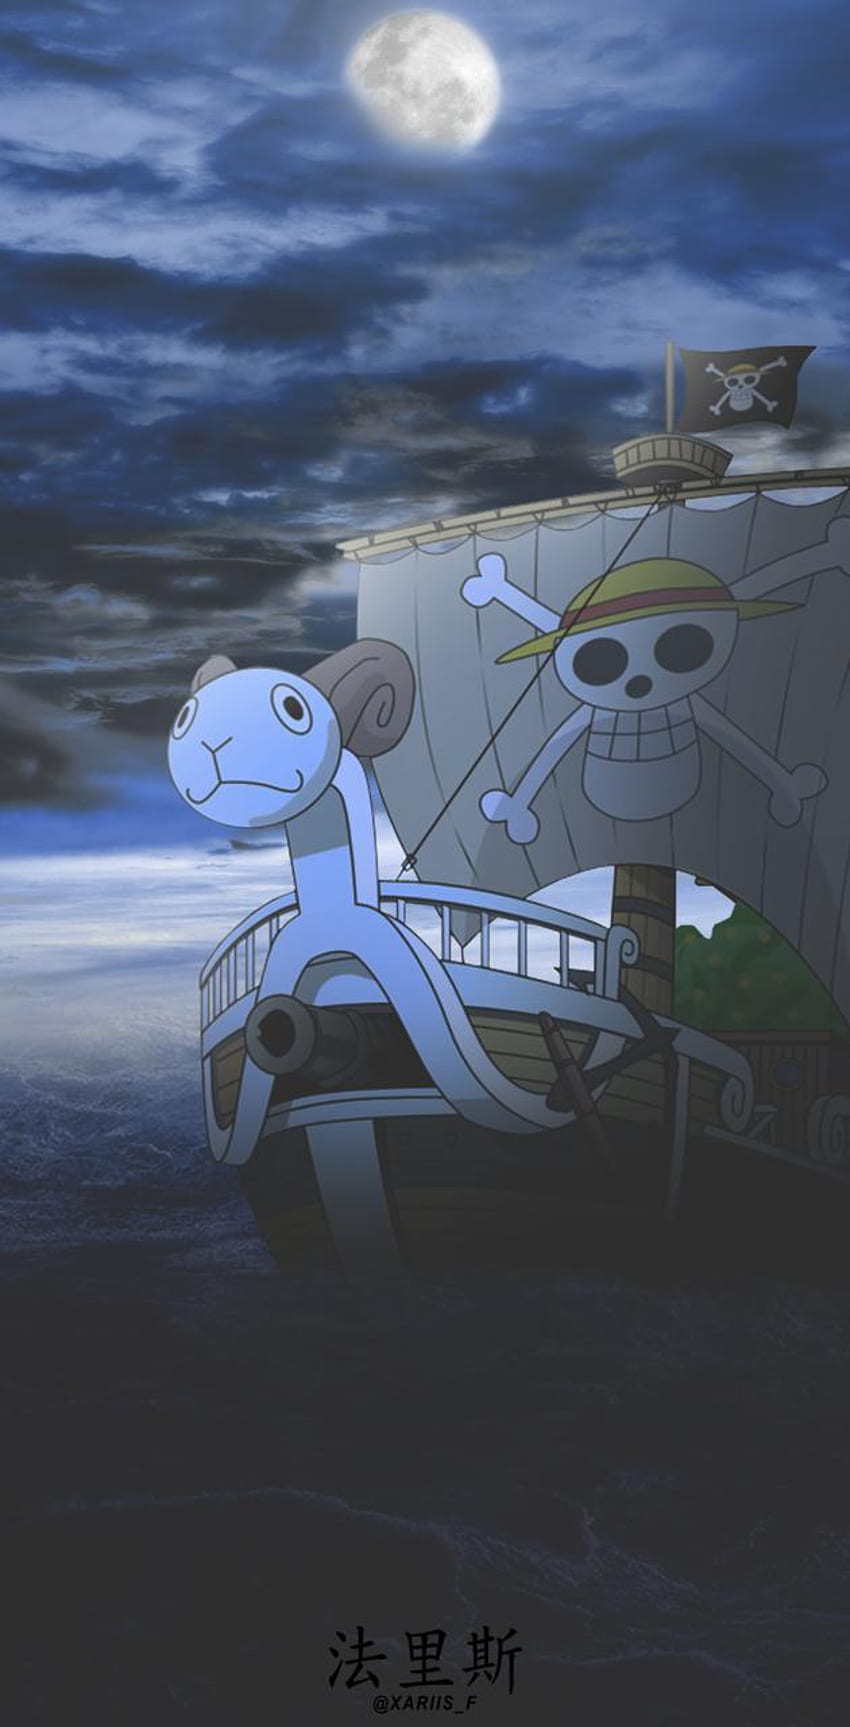 Selamat Bergembira, One Piece Bersukacitalah wallpaper ponsel HD